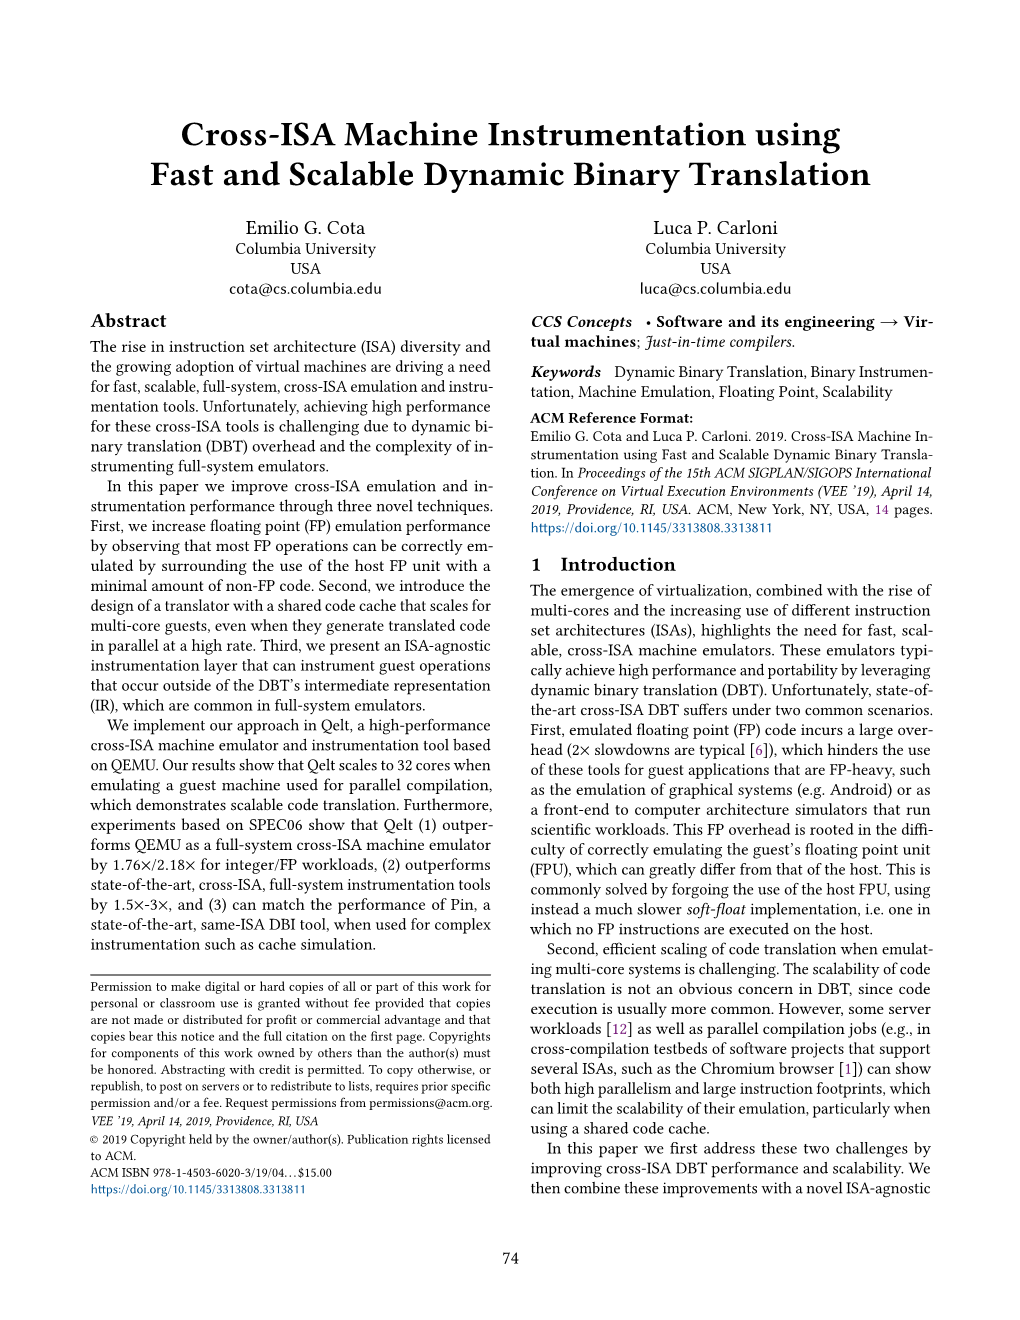 Cross-ISA Machine Instrumentation Using Fast and Scalable Dynamic Binary Translation